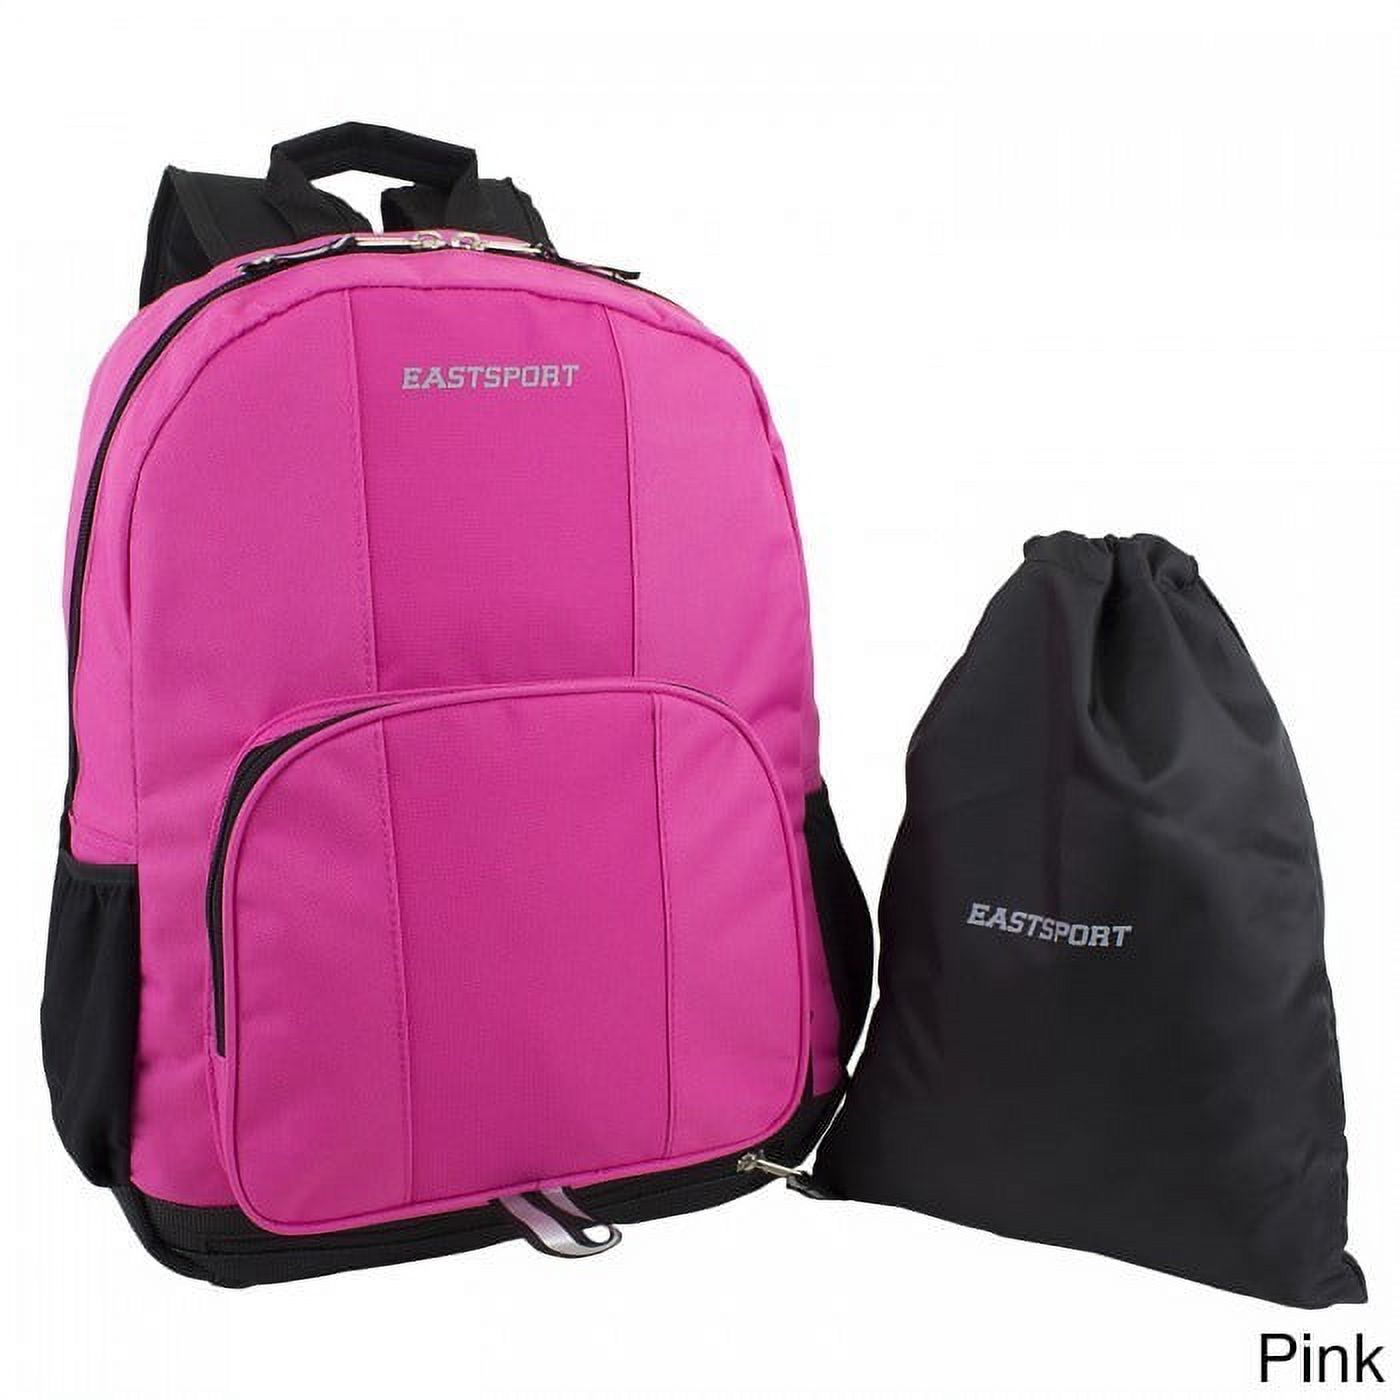 Eastsport Unisex Classic Backpack with Bonus Drawstring Bag Pink - image 1 of 6